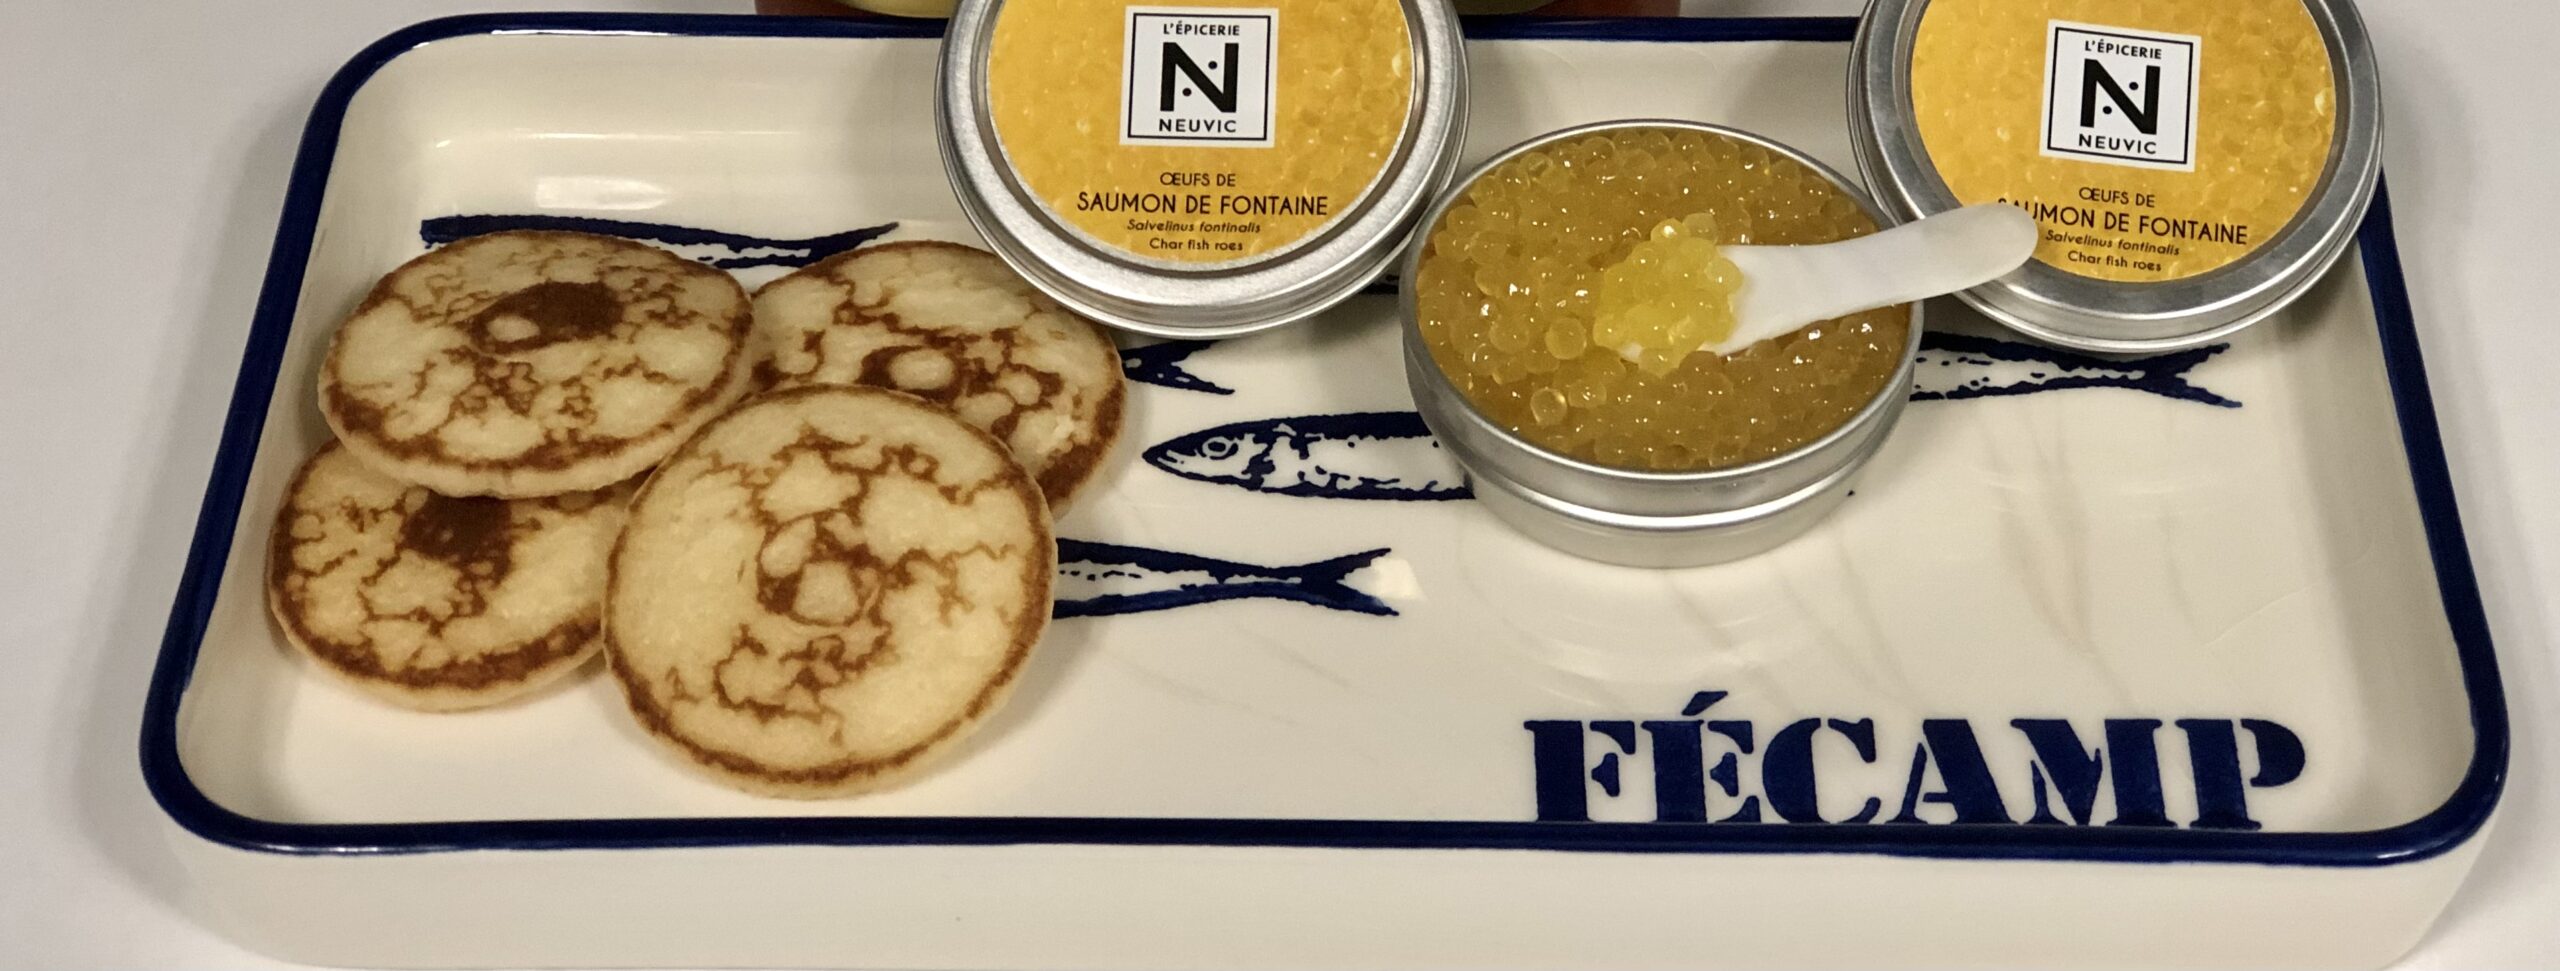 Oeufs de saumon de fontaine bio - L'Épicerie Neuvic - Caviar de Neuvic